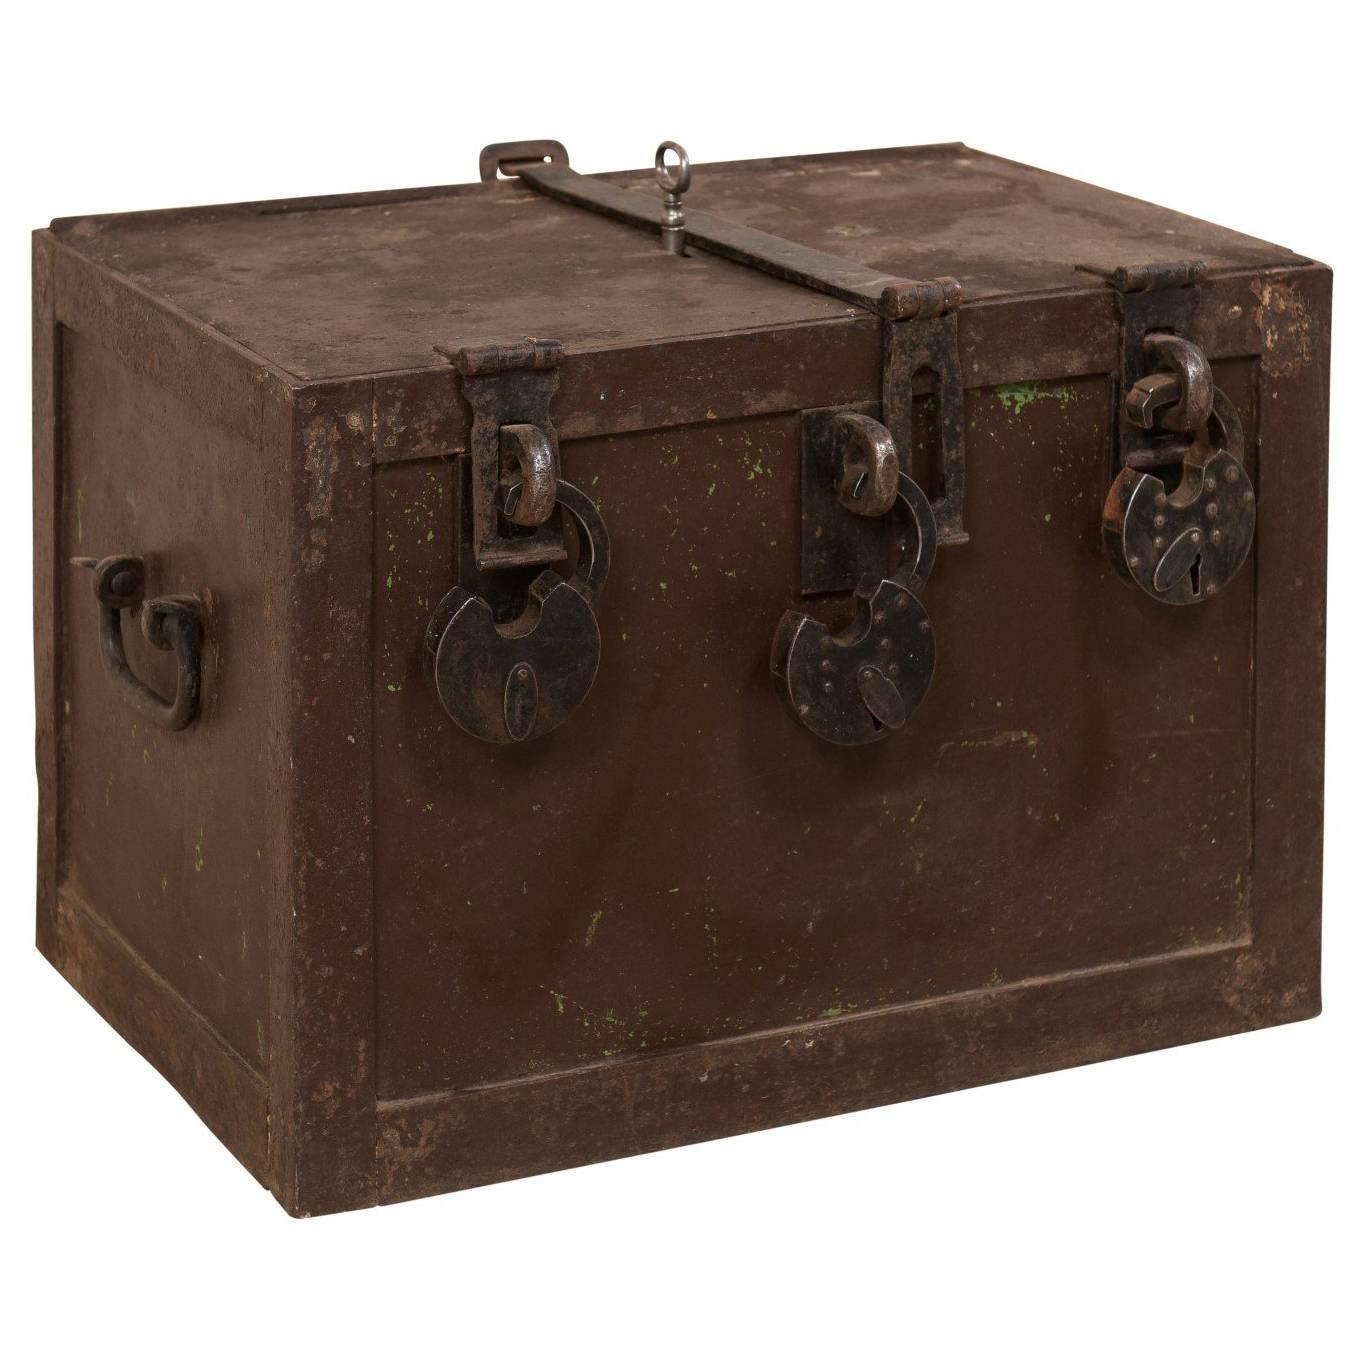 19th Century Swedish Mid-Sized Iron Trunk Safe with Locks and Key